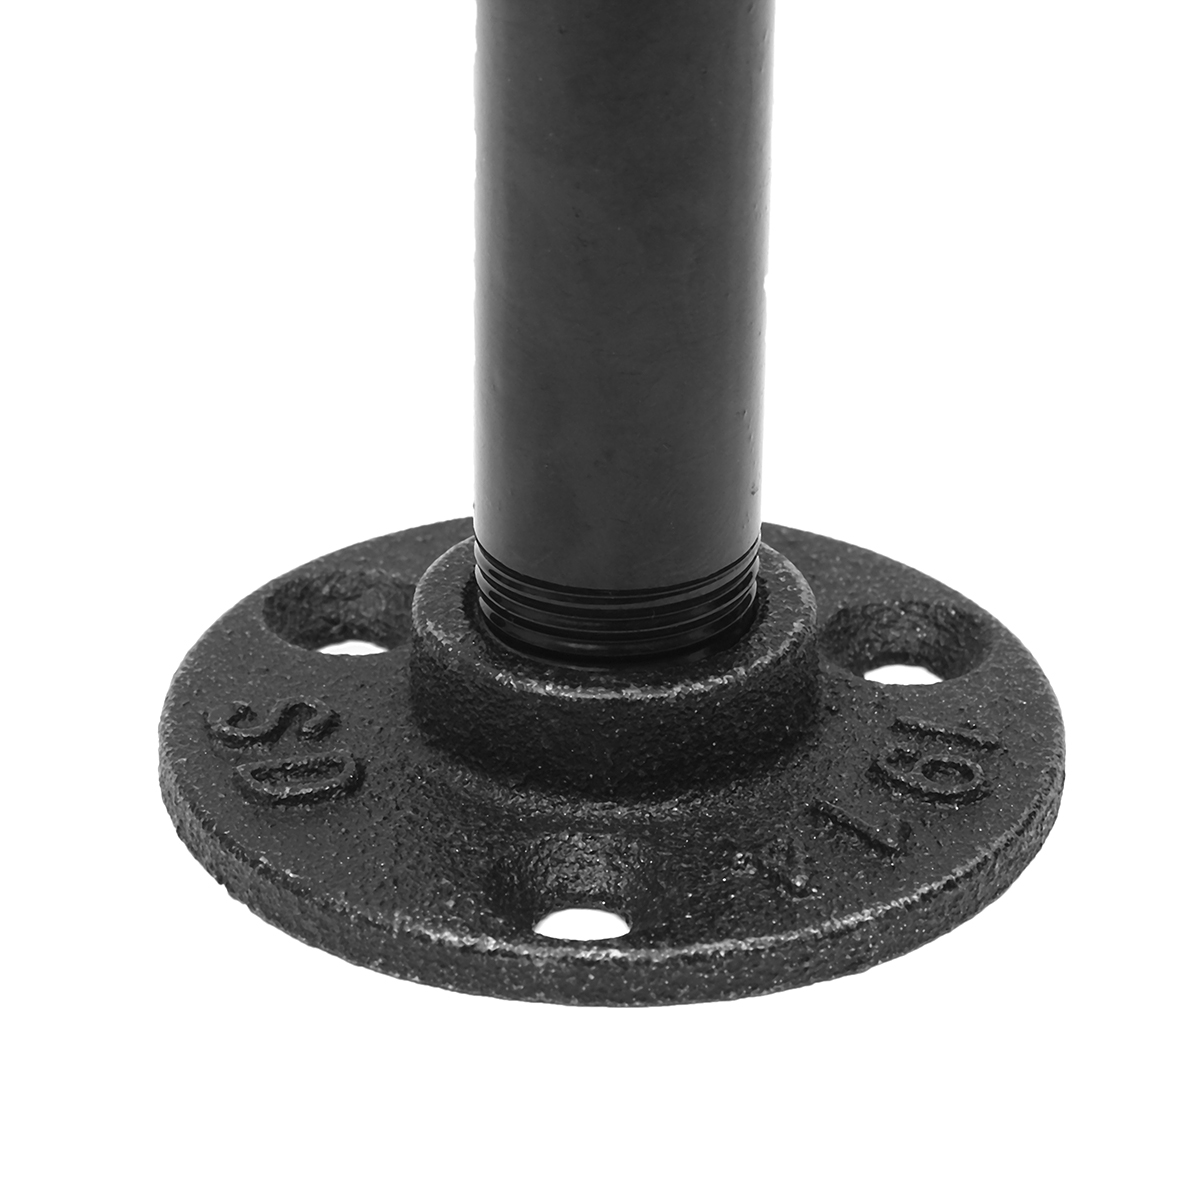 160mm-Length-Iron-Industrial-Pipe-Shelf-Vintage-Black-Bracket-Holder-Home-Decor-1183308-8